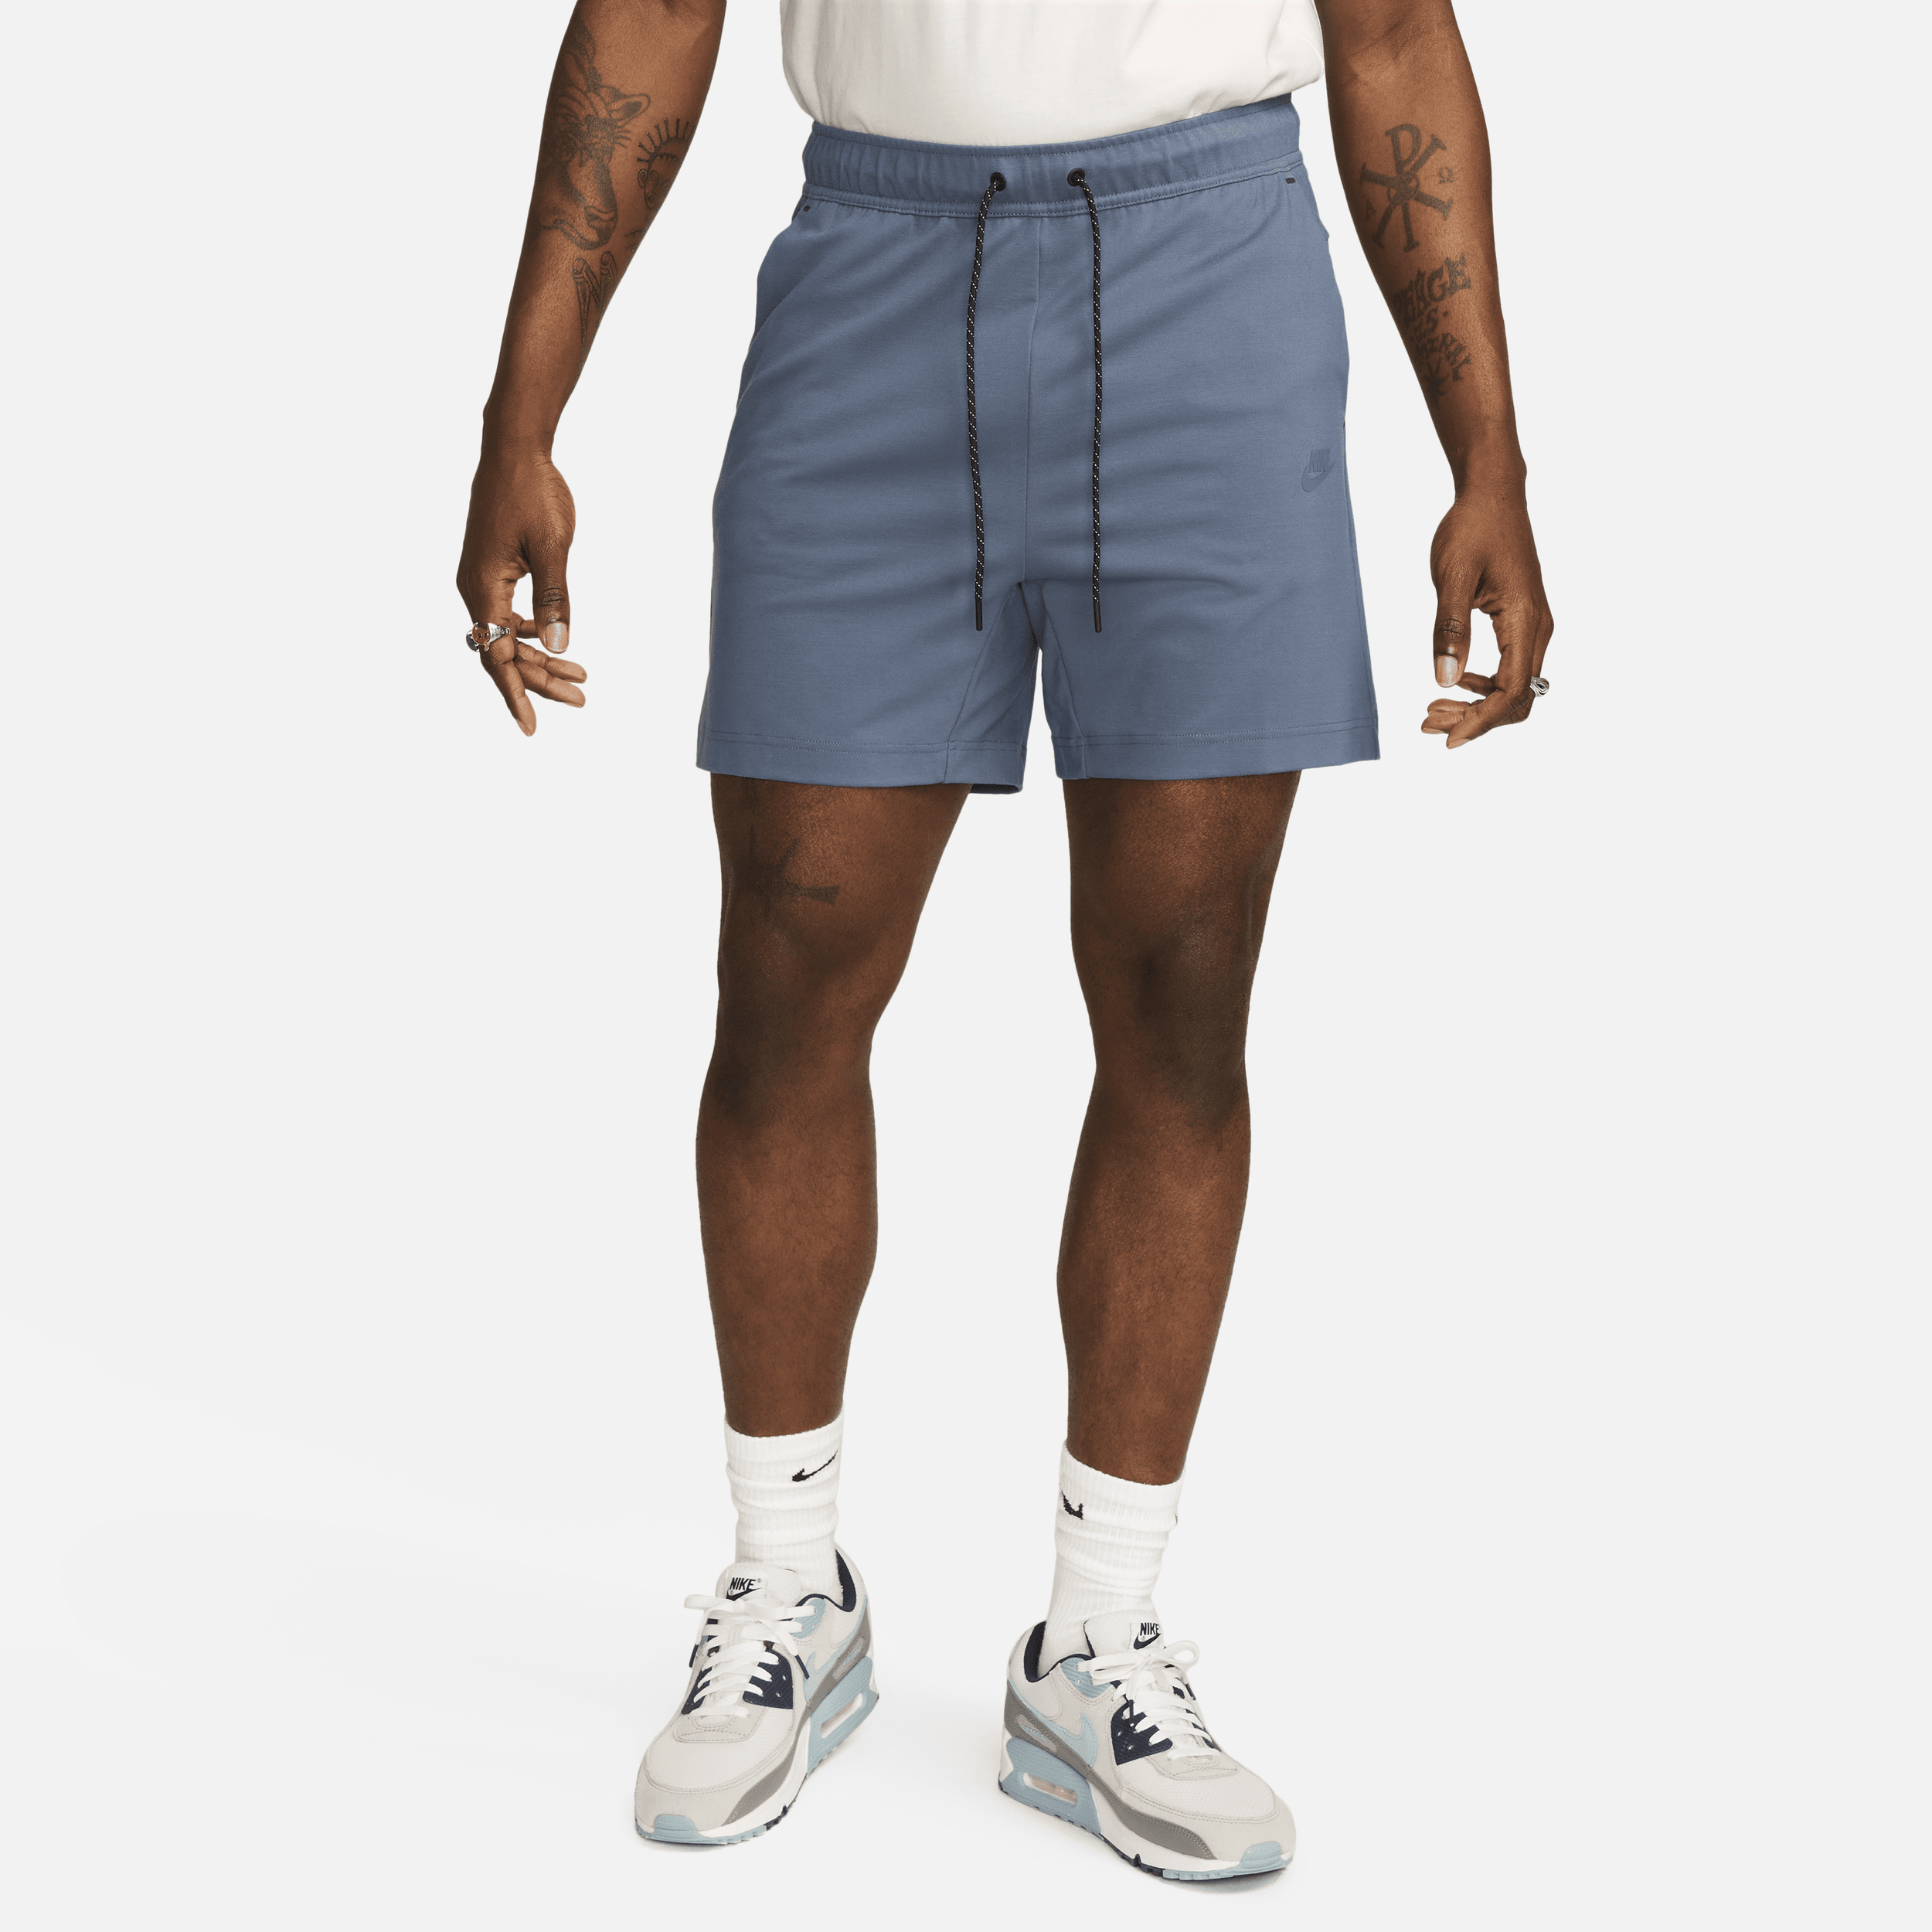 Lette Nike Sportswear Tech Fleece-shorts til mænd - blå